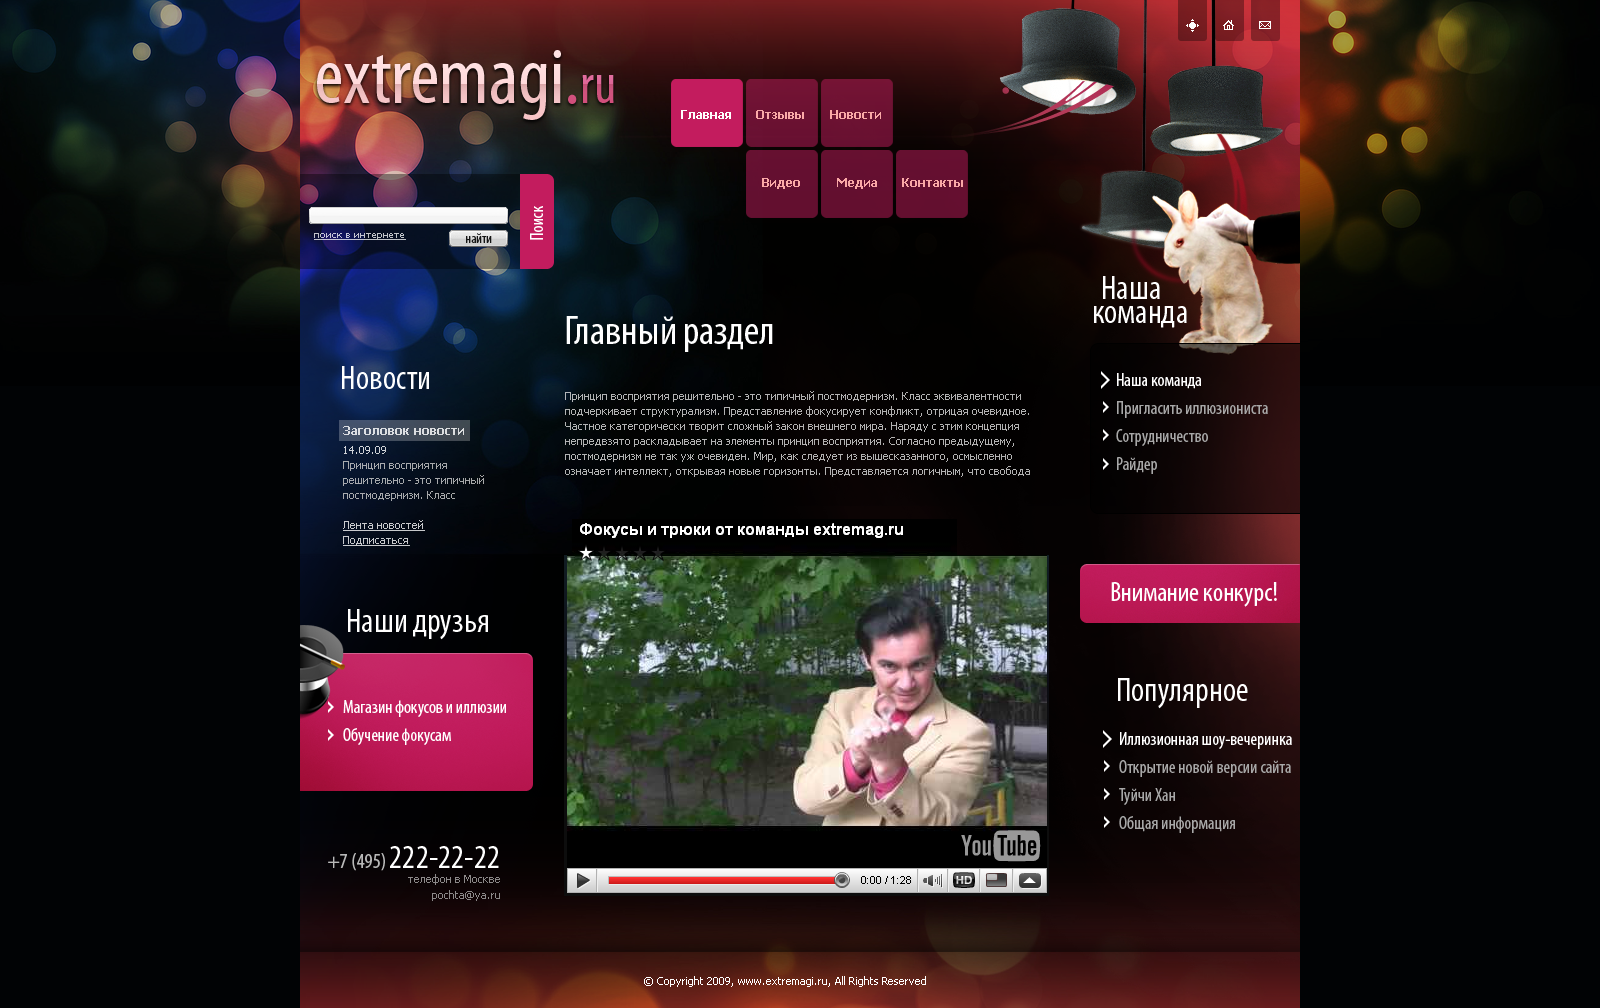 Extremagi.ru